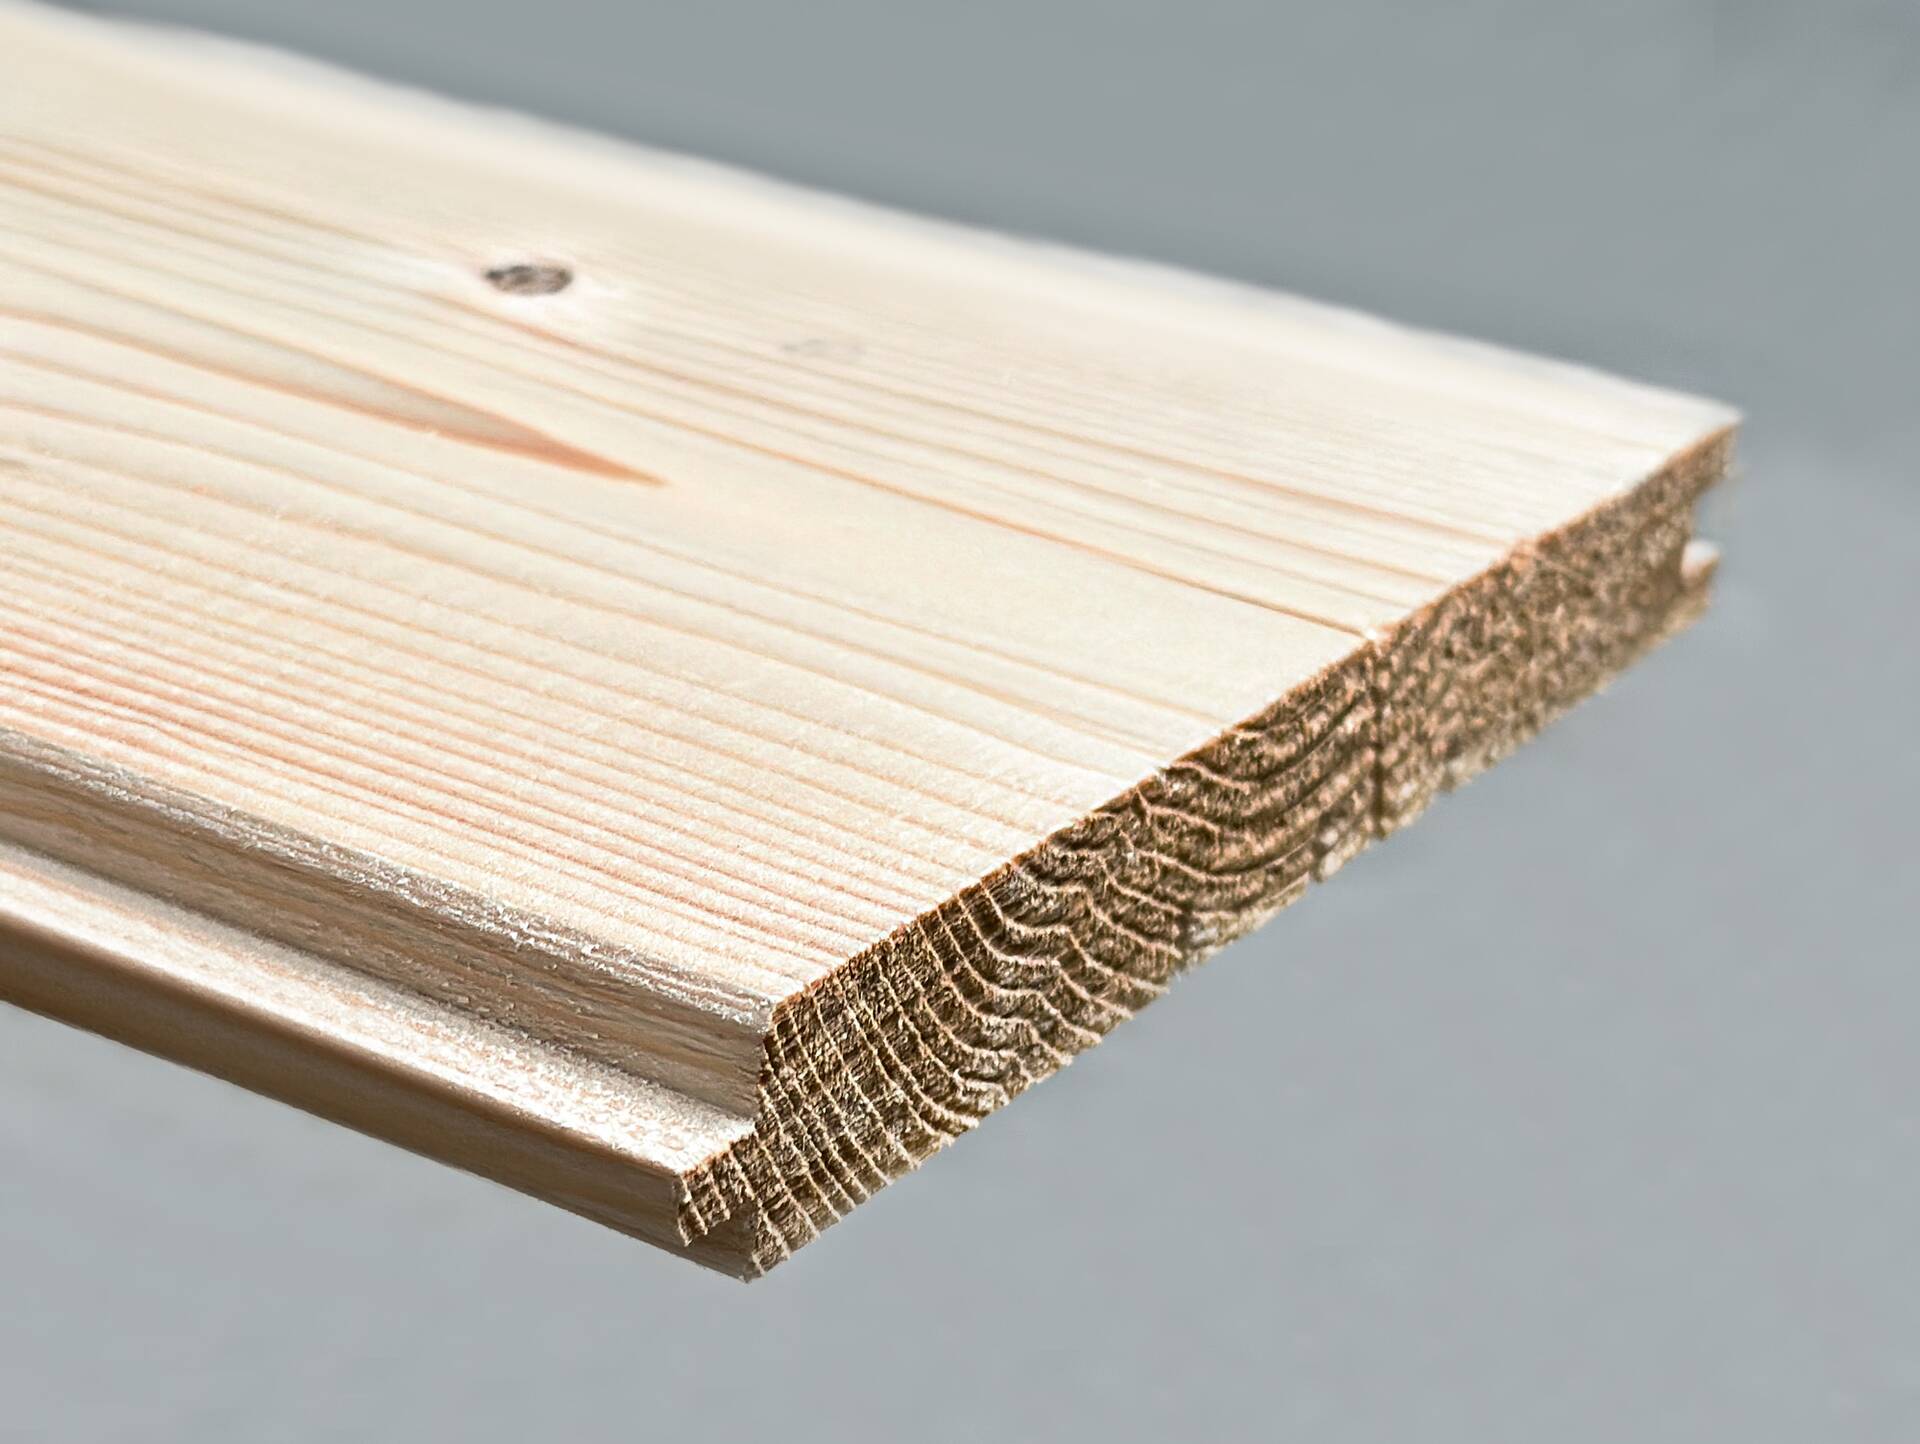 Nut- und Federbretter, Fichte gehobelt, Material Massivholz, verschiedene Längen erhältlich 24 mm | 2.5 Meter